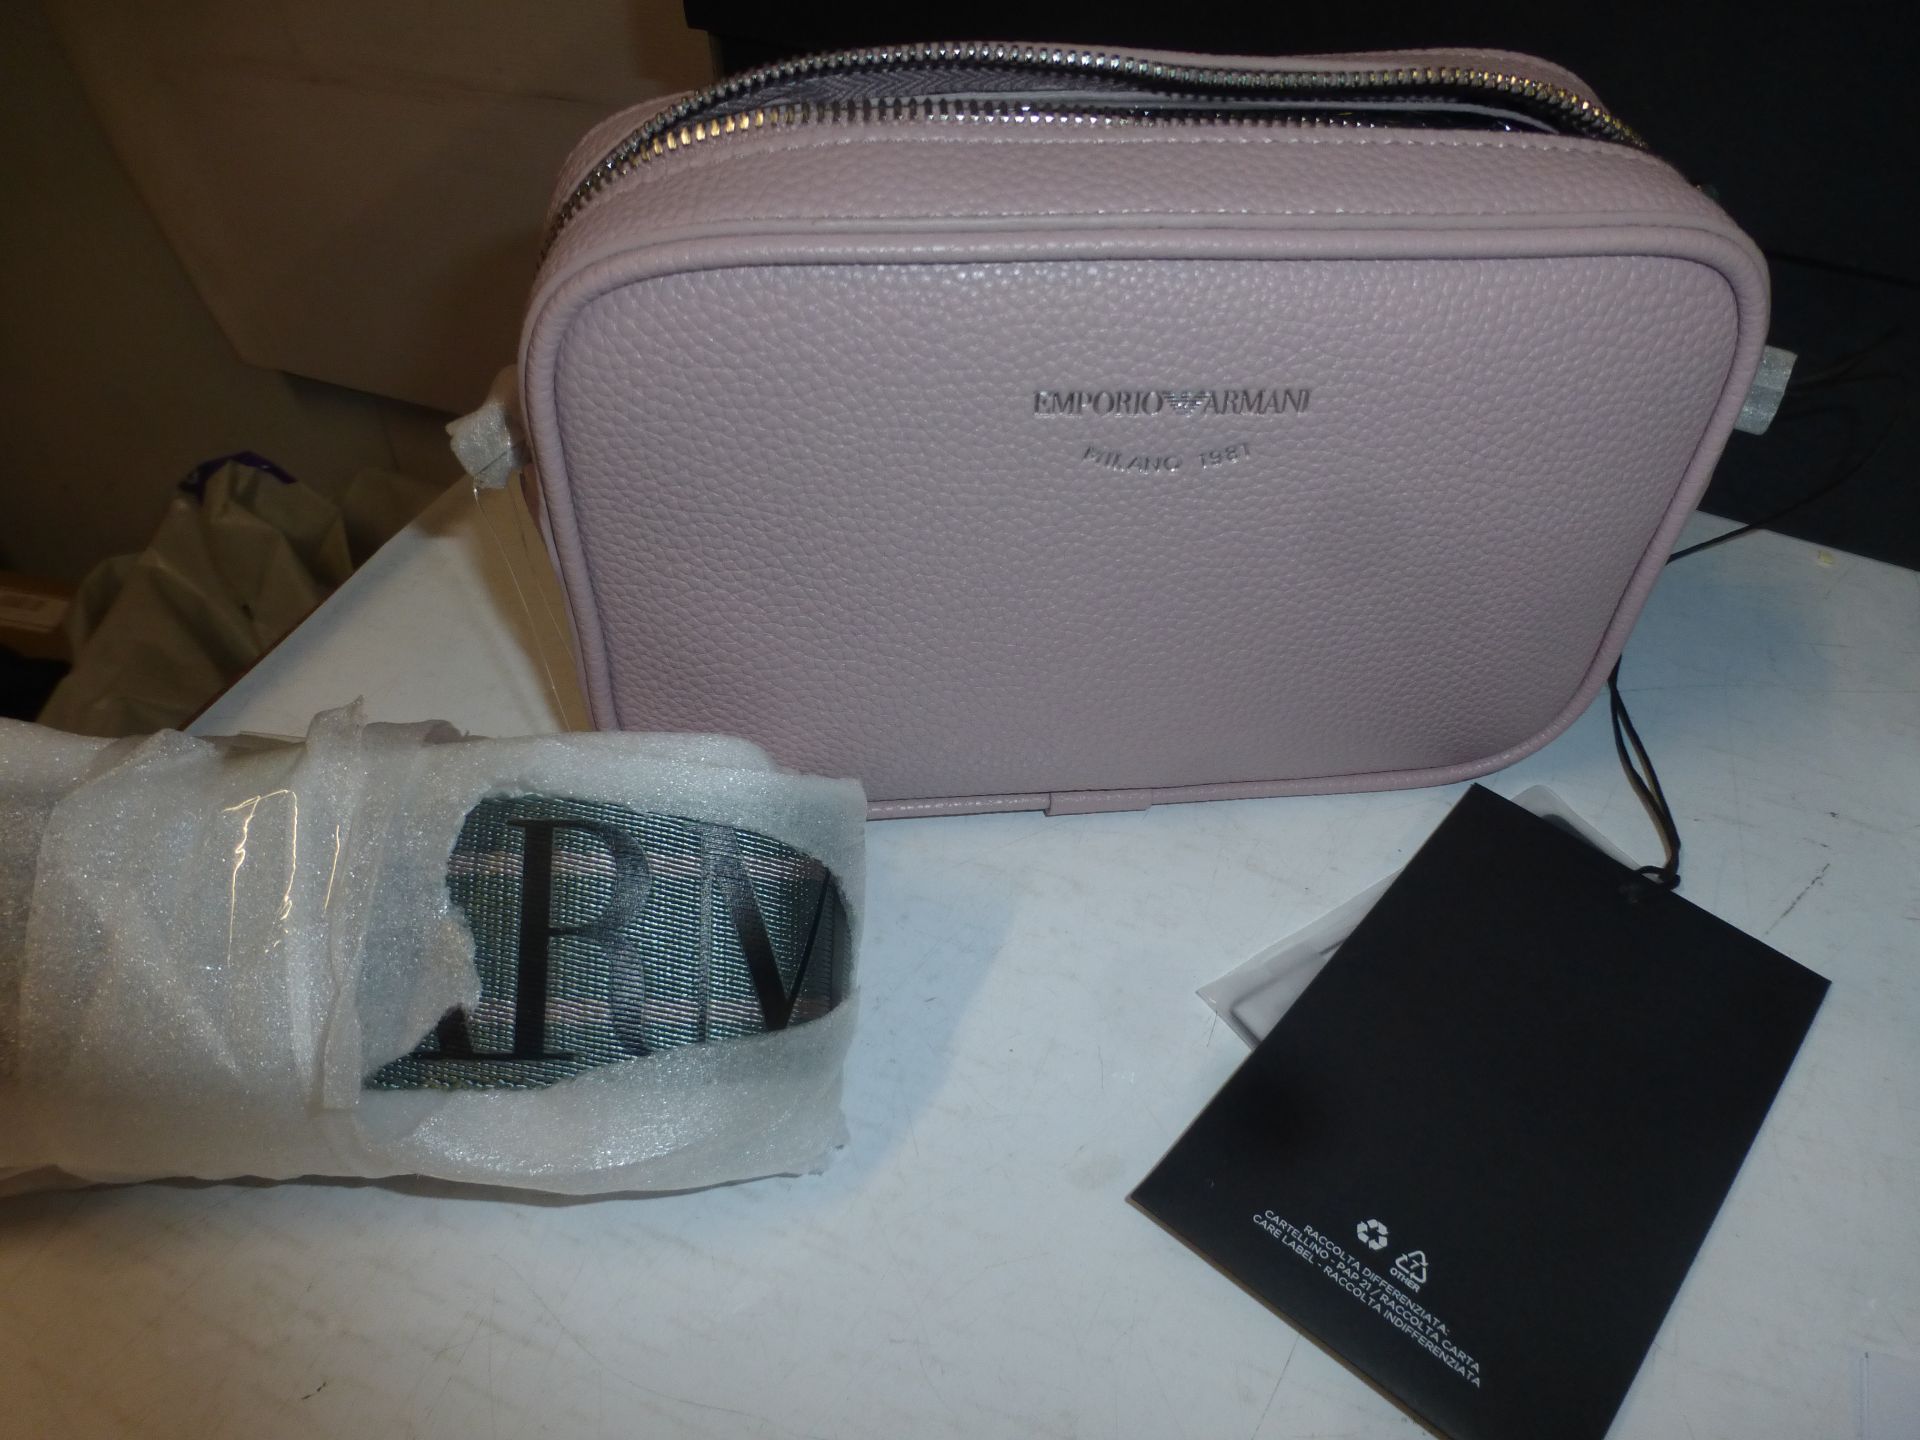 1 x pink Emporio Armani camera bag, mini - new with tags (C12B)